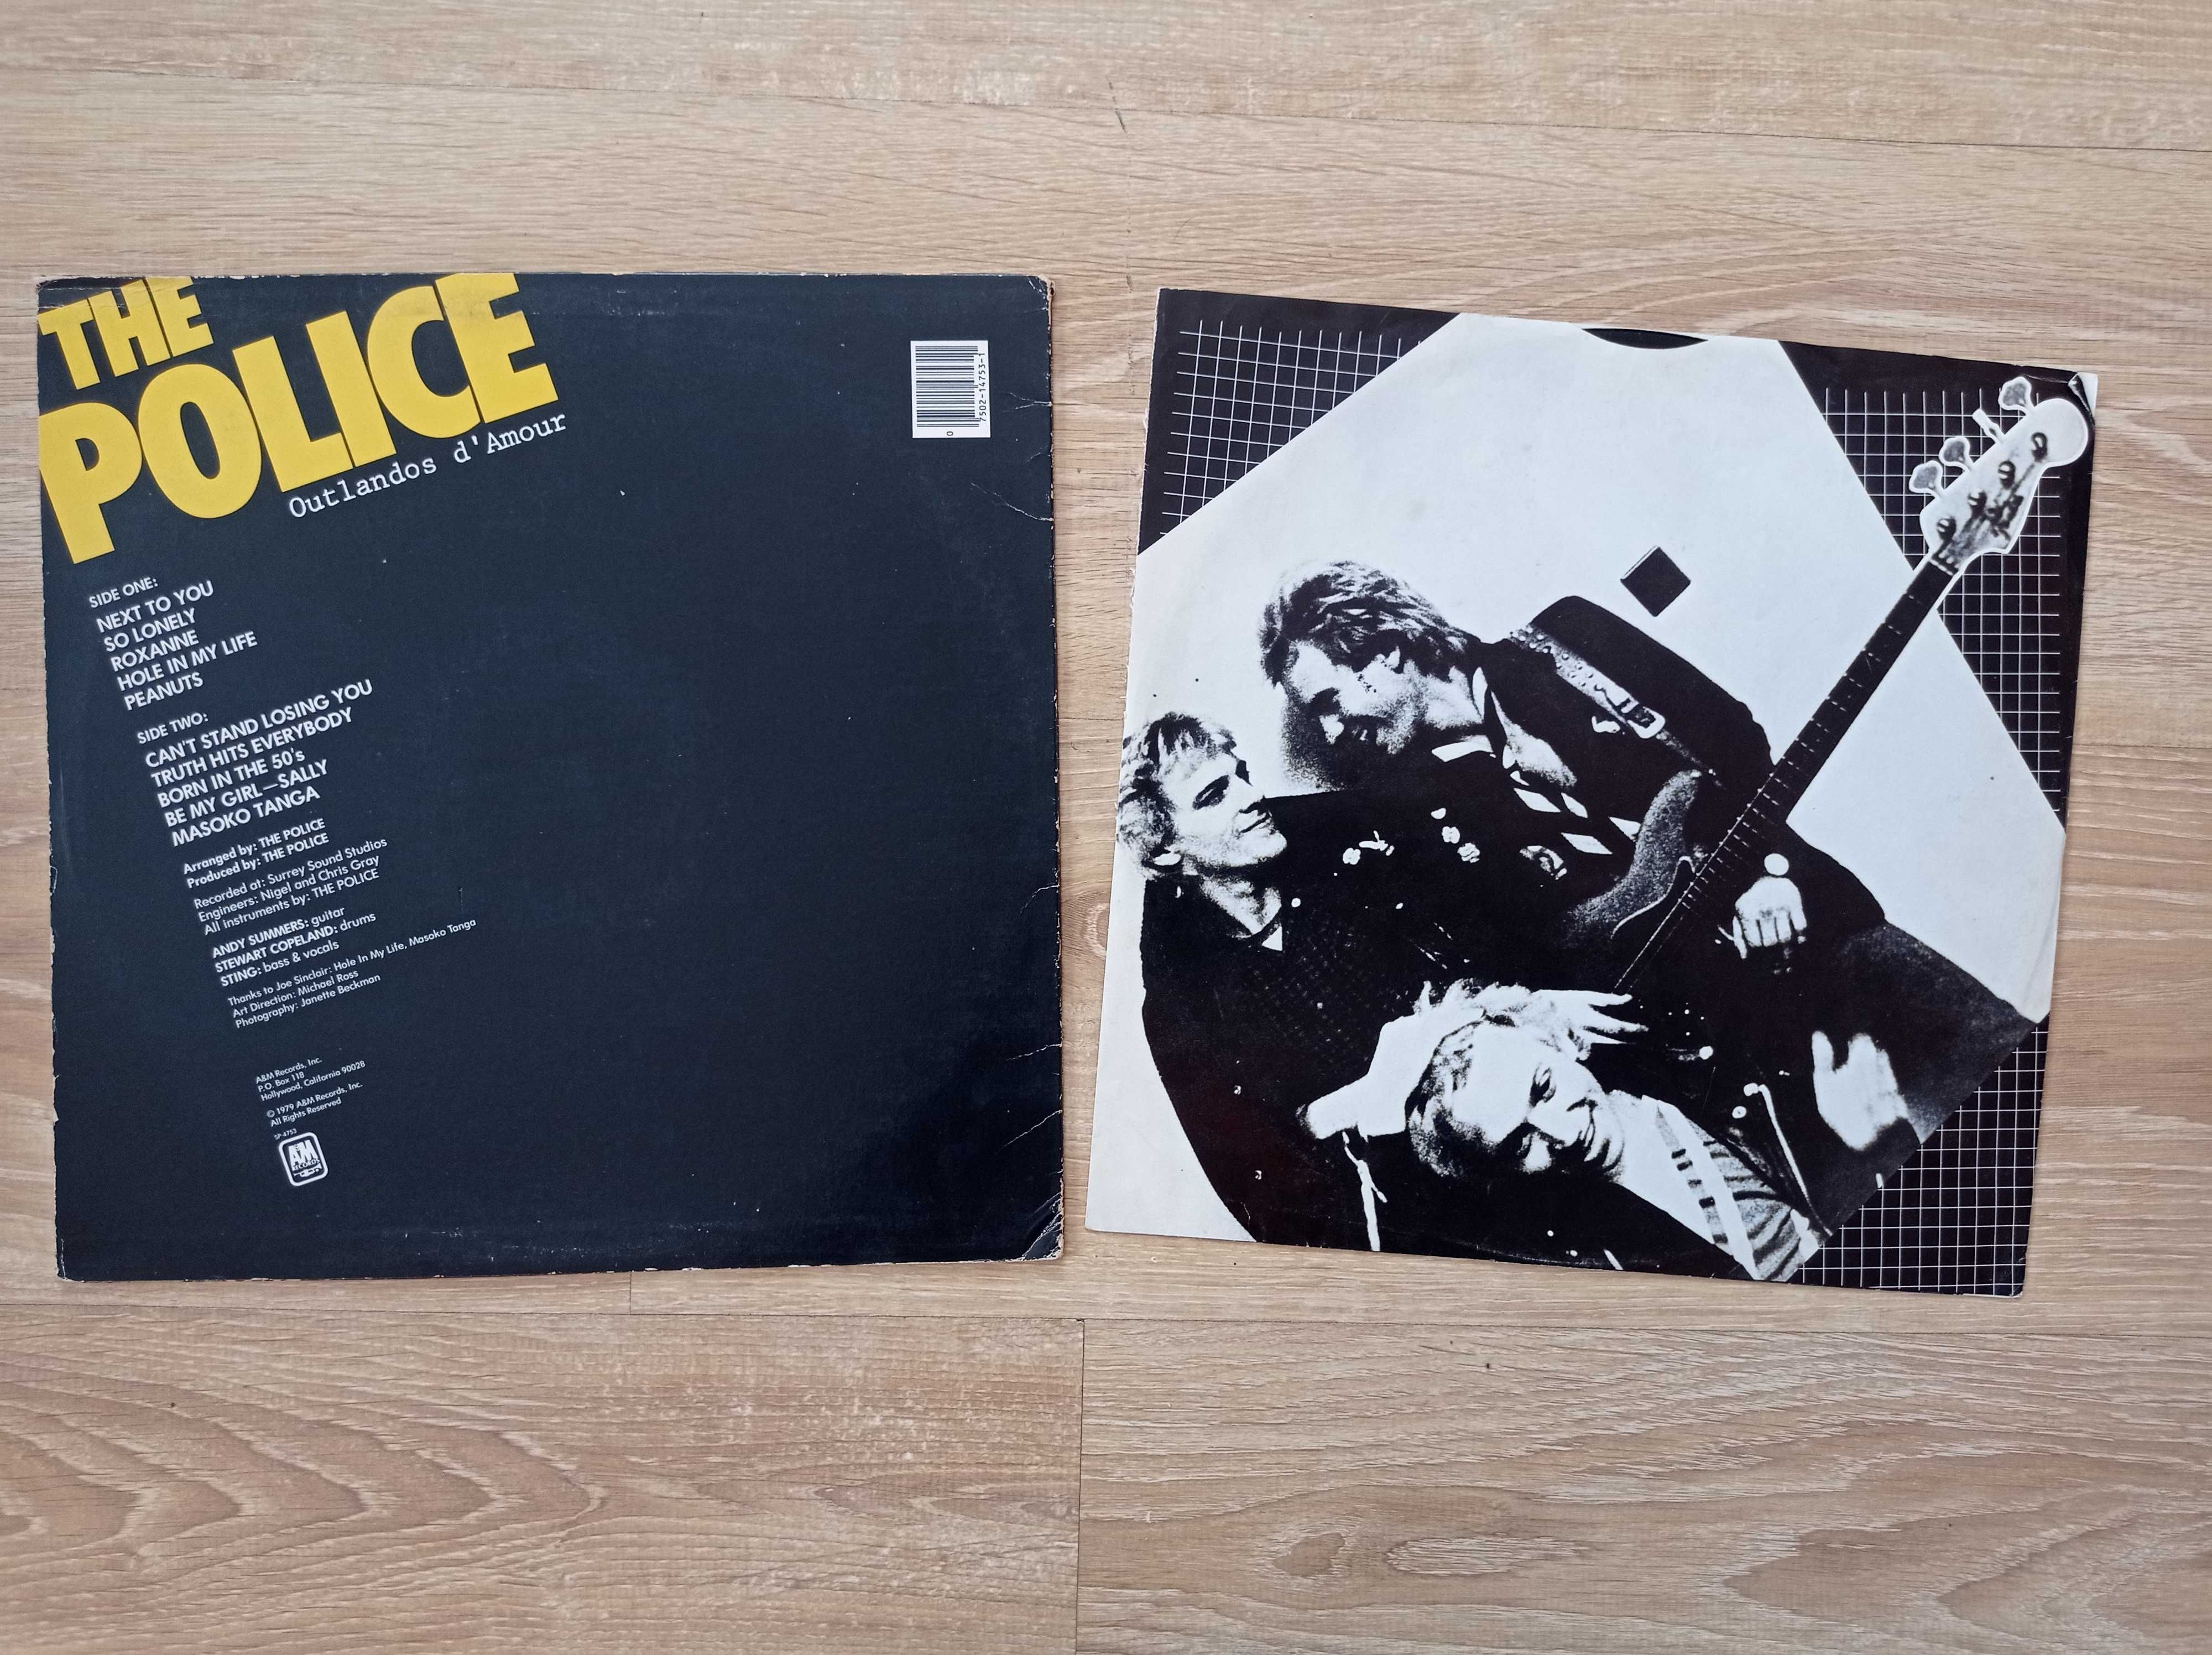 The Police - Outlandos D' amour - 1978 -A&M Records - winyl.